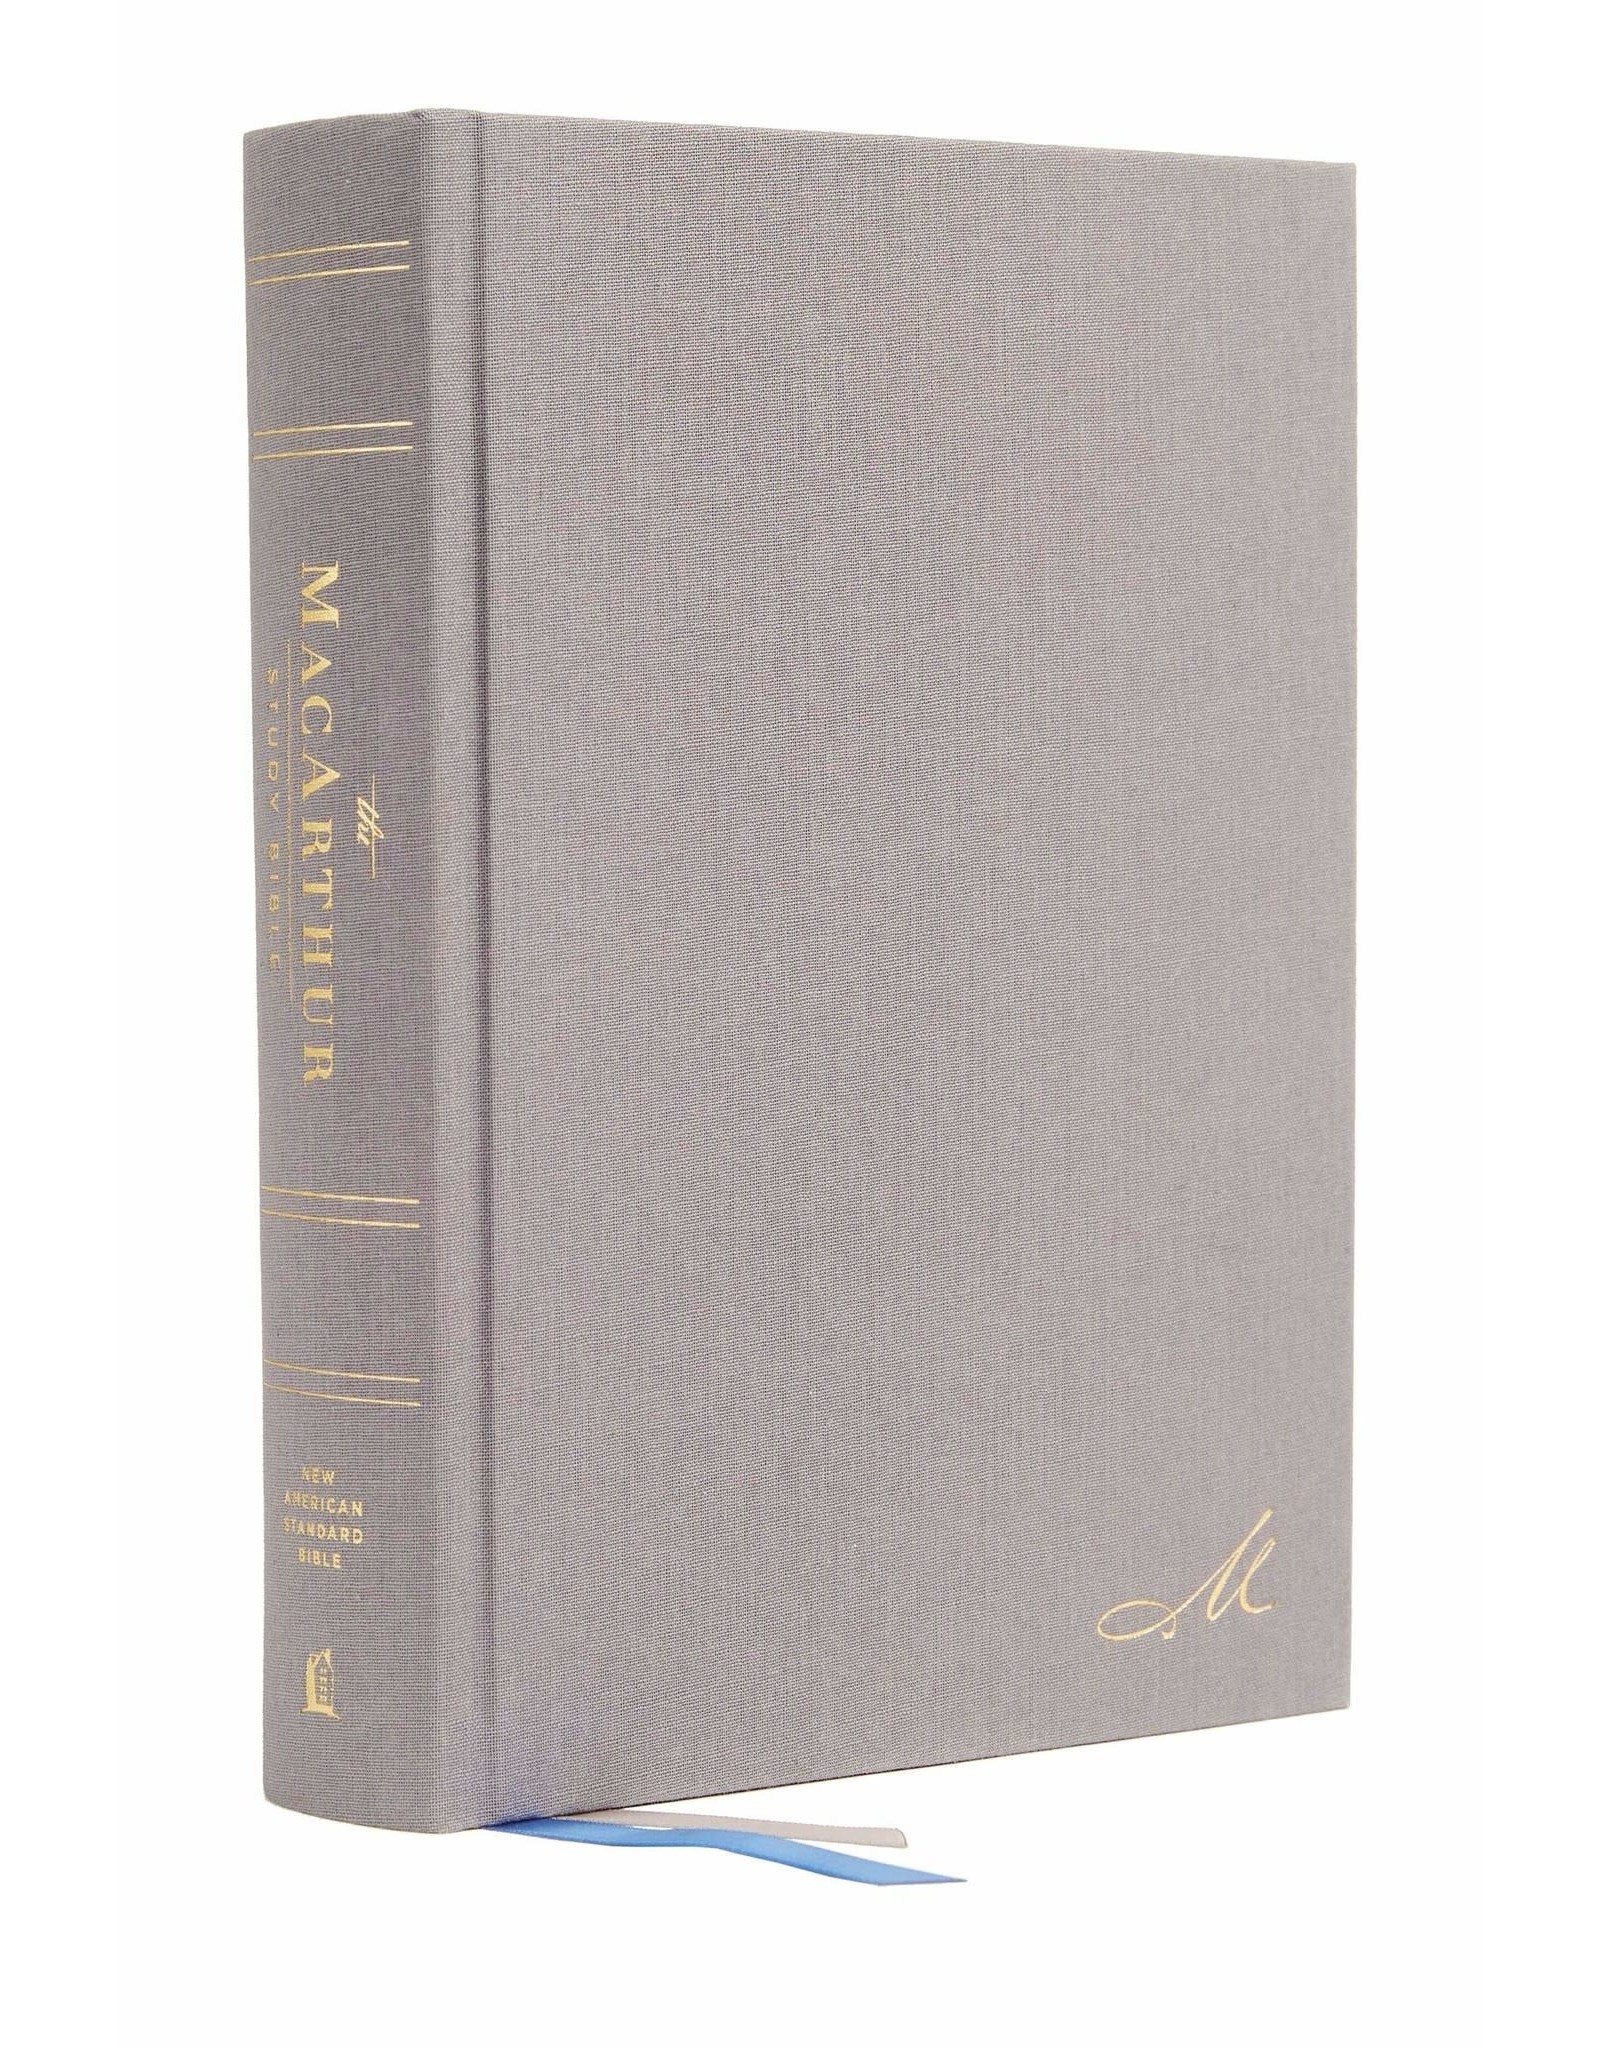 Harper Collins / Thomas Nelson / Zondervan MSB NASB MacArthur Study Bible (2nd Edition, Hardcover, Gray)